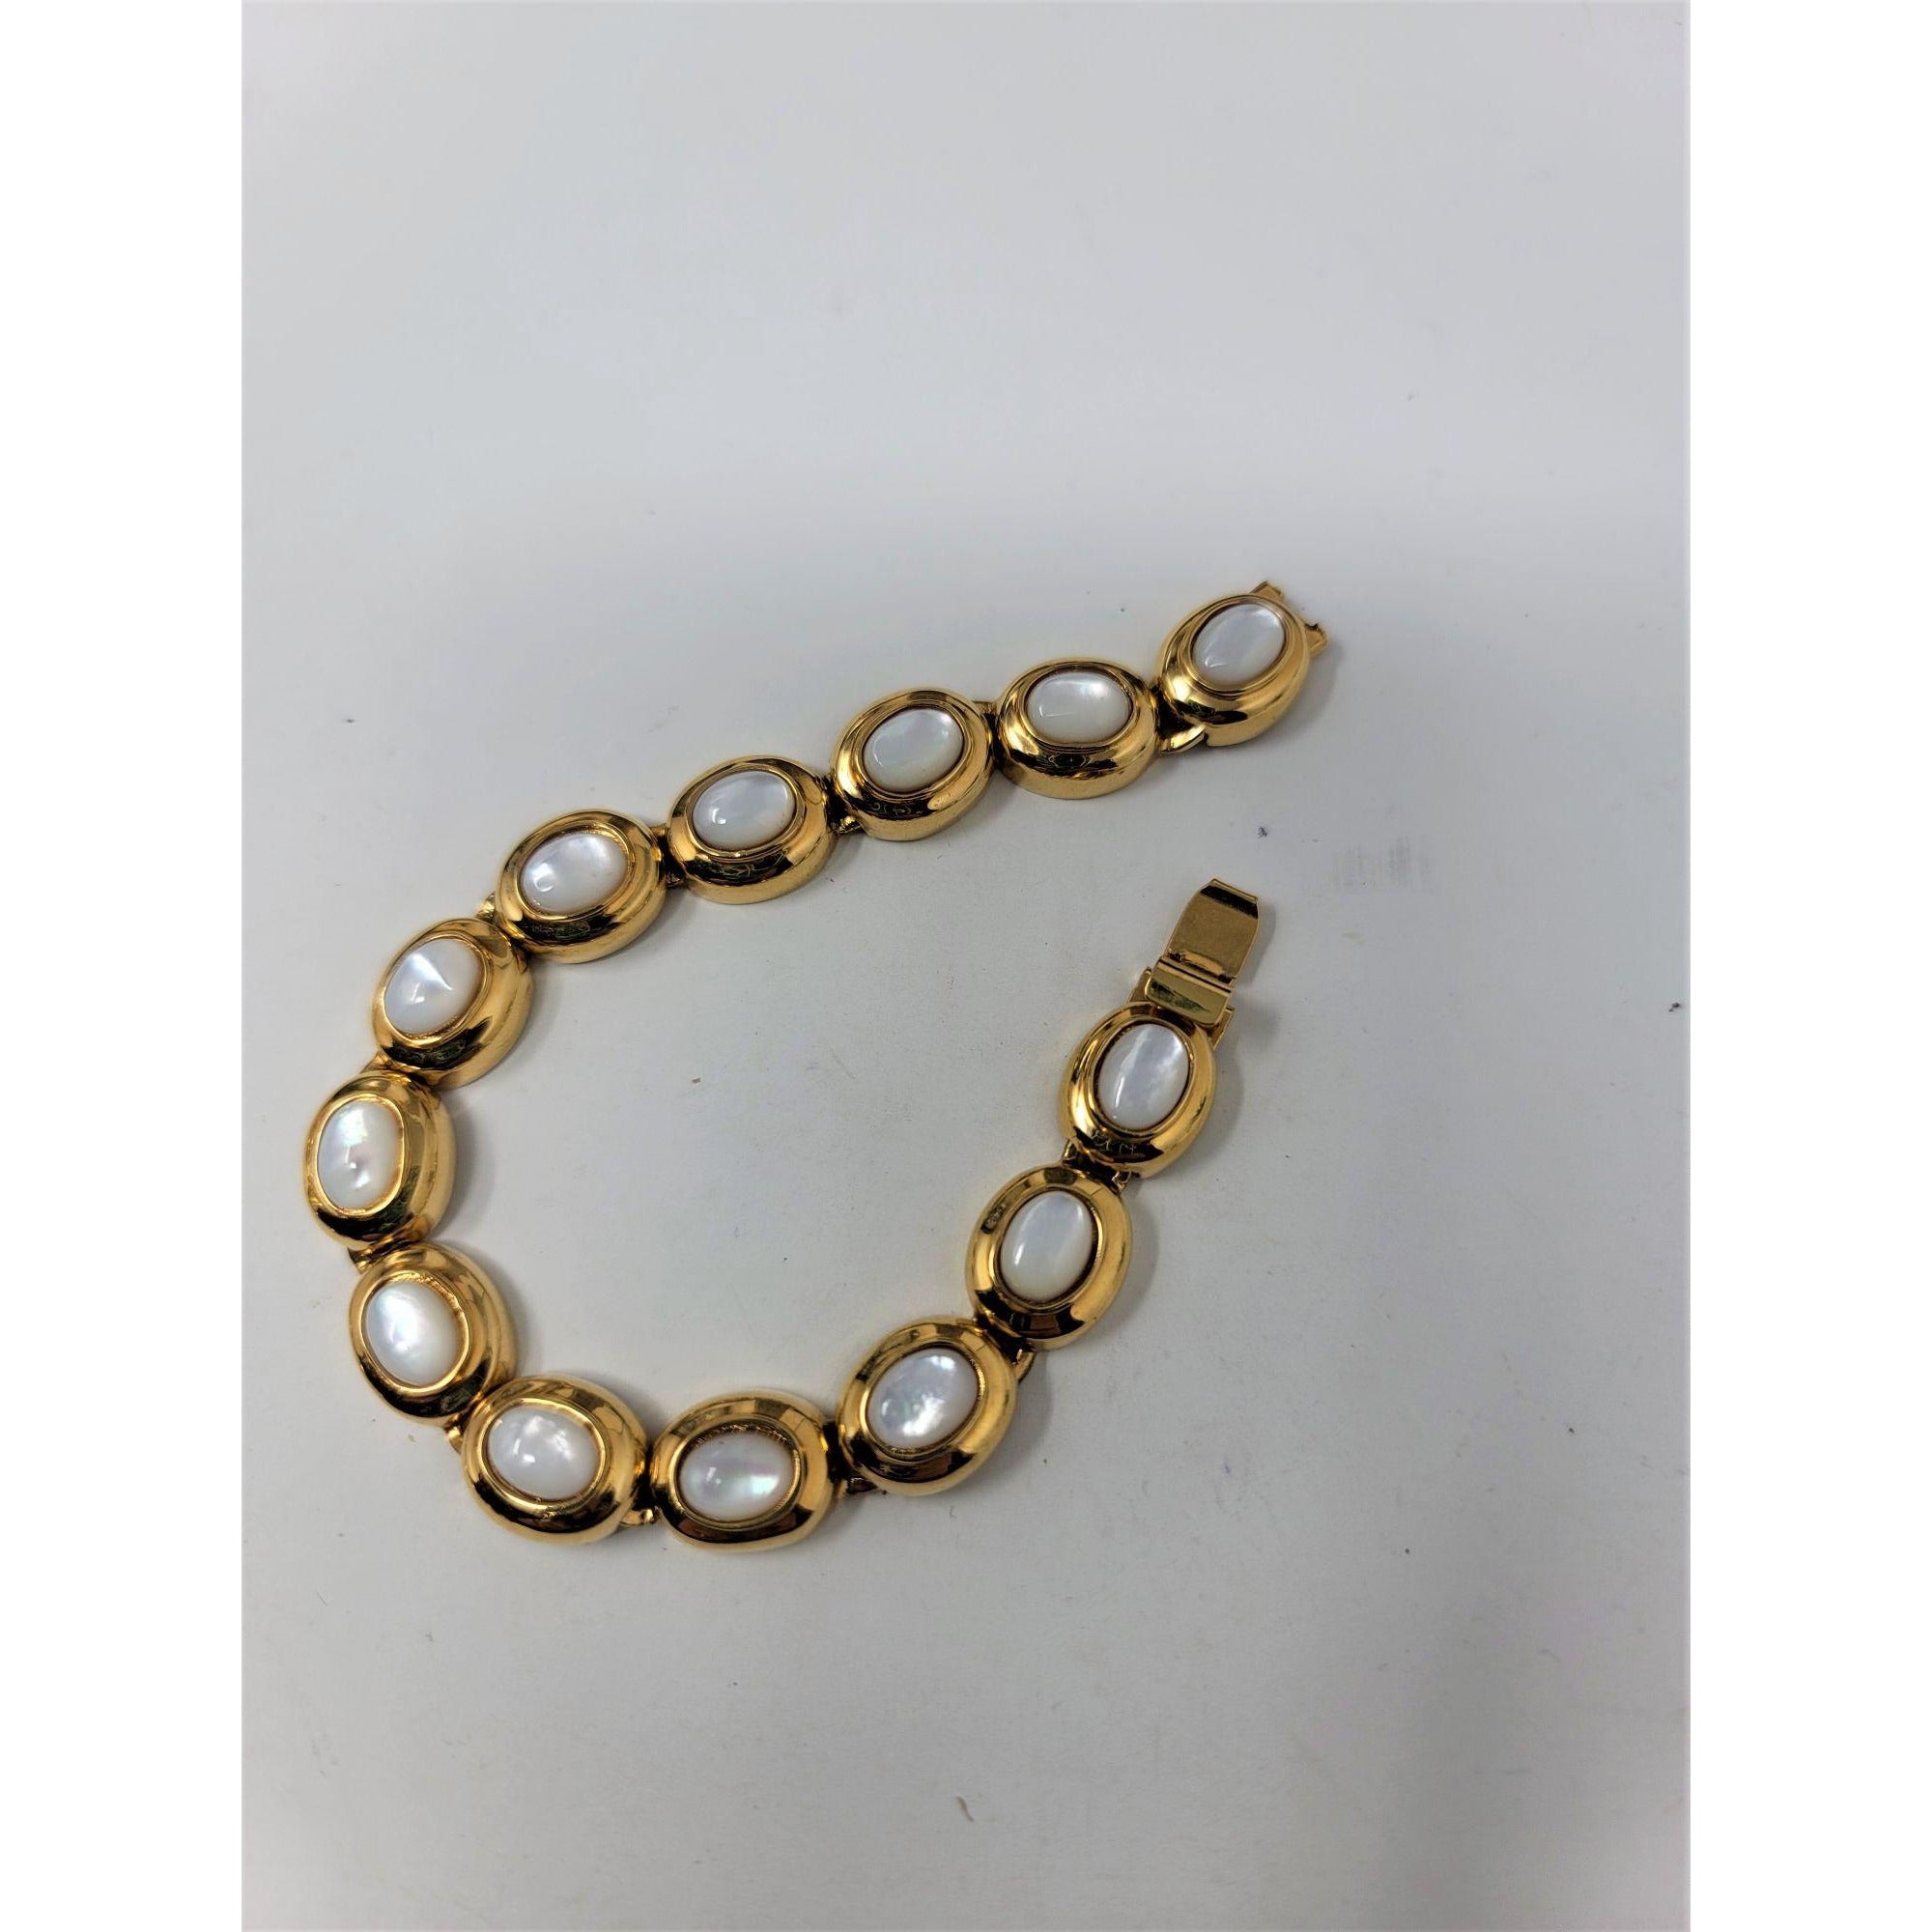 Vintage Gold & Mother of Pearl Necklace Set